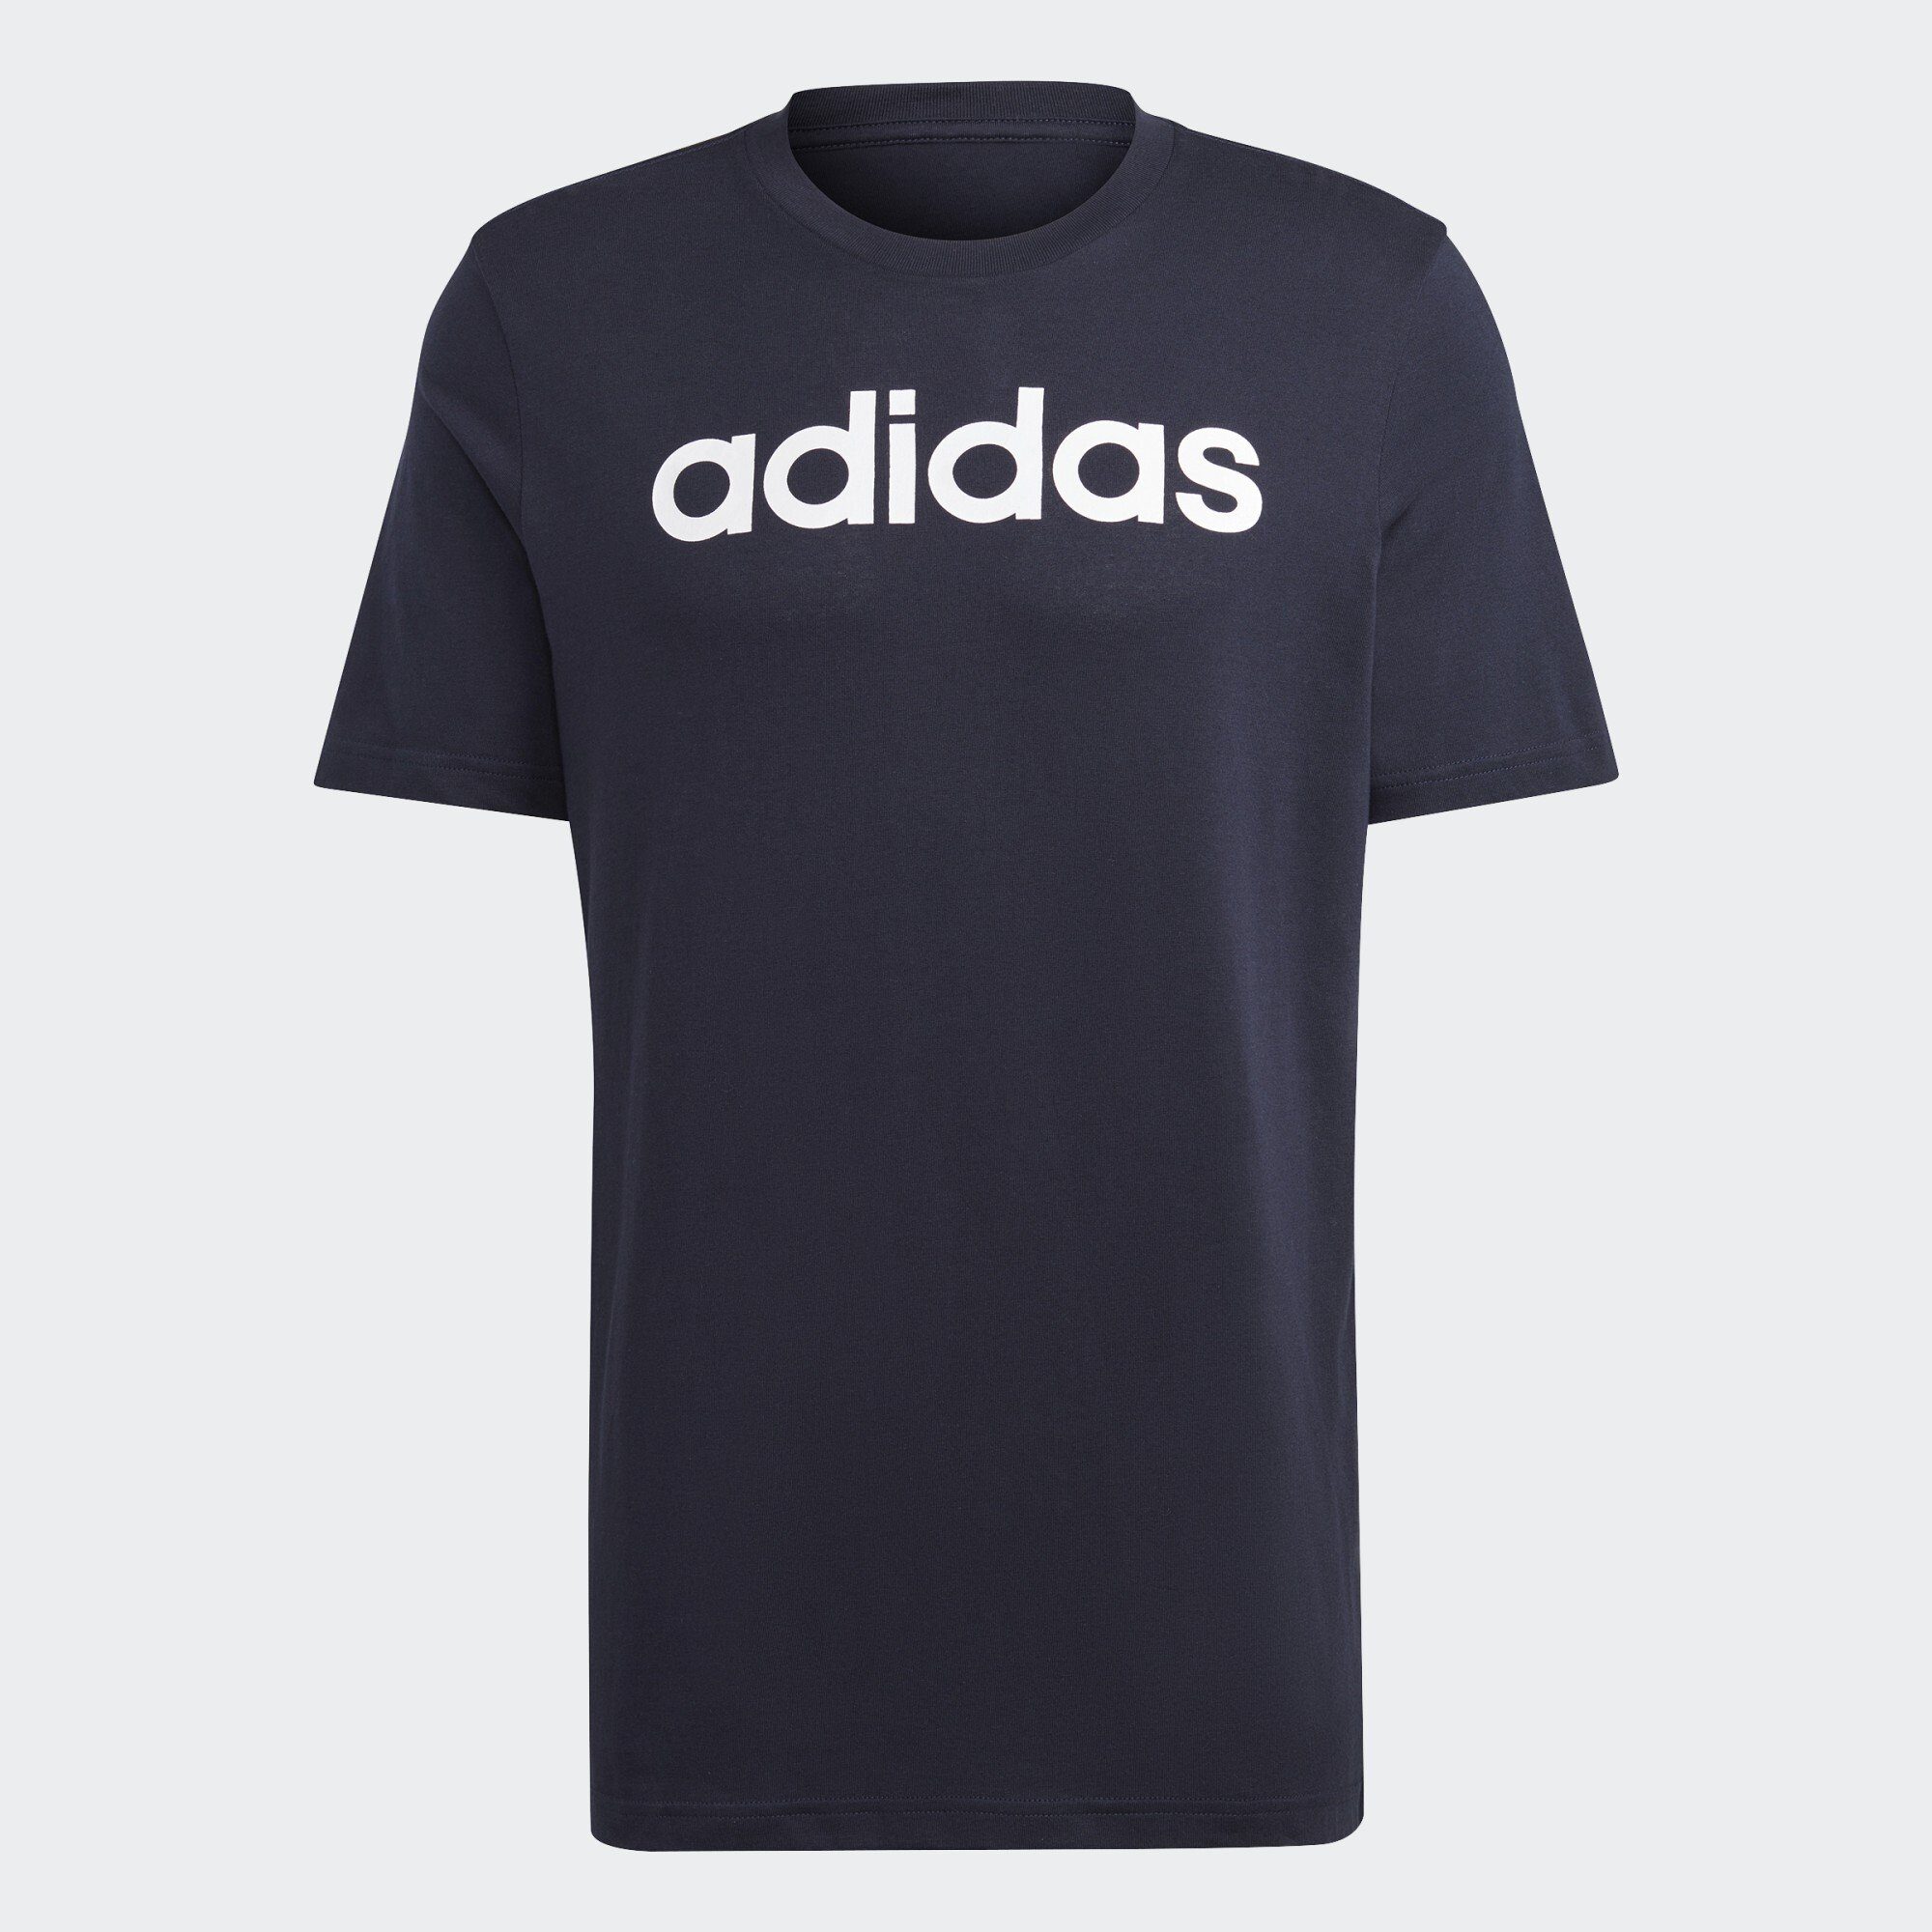 adidas Legend / White Ink T-Shirt Sportswear